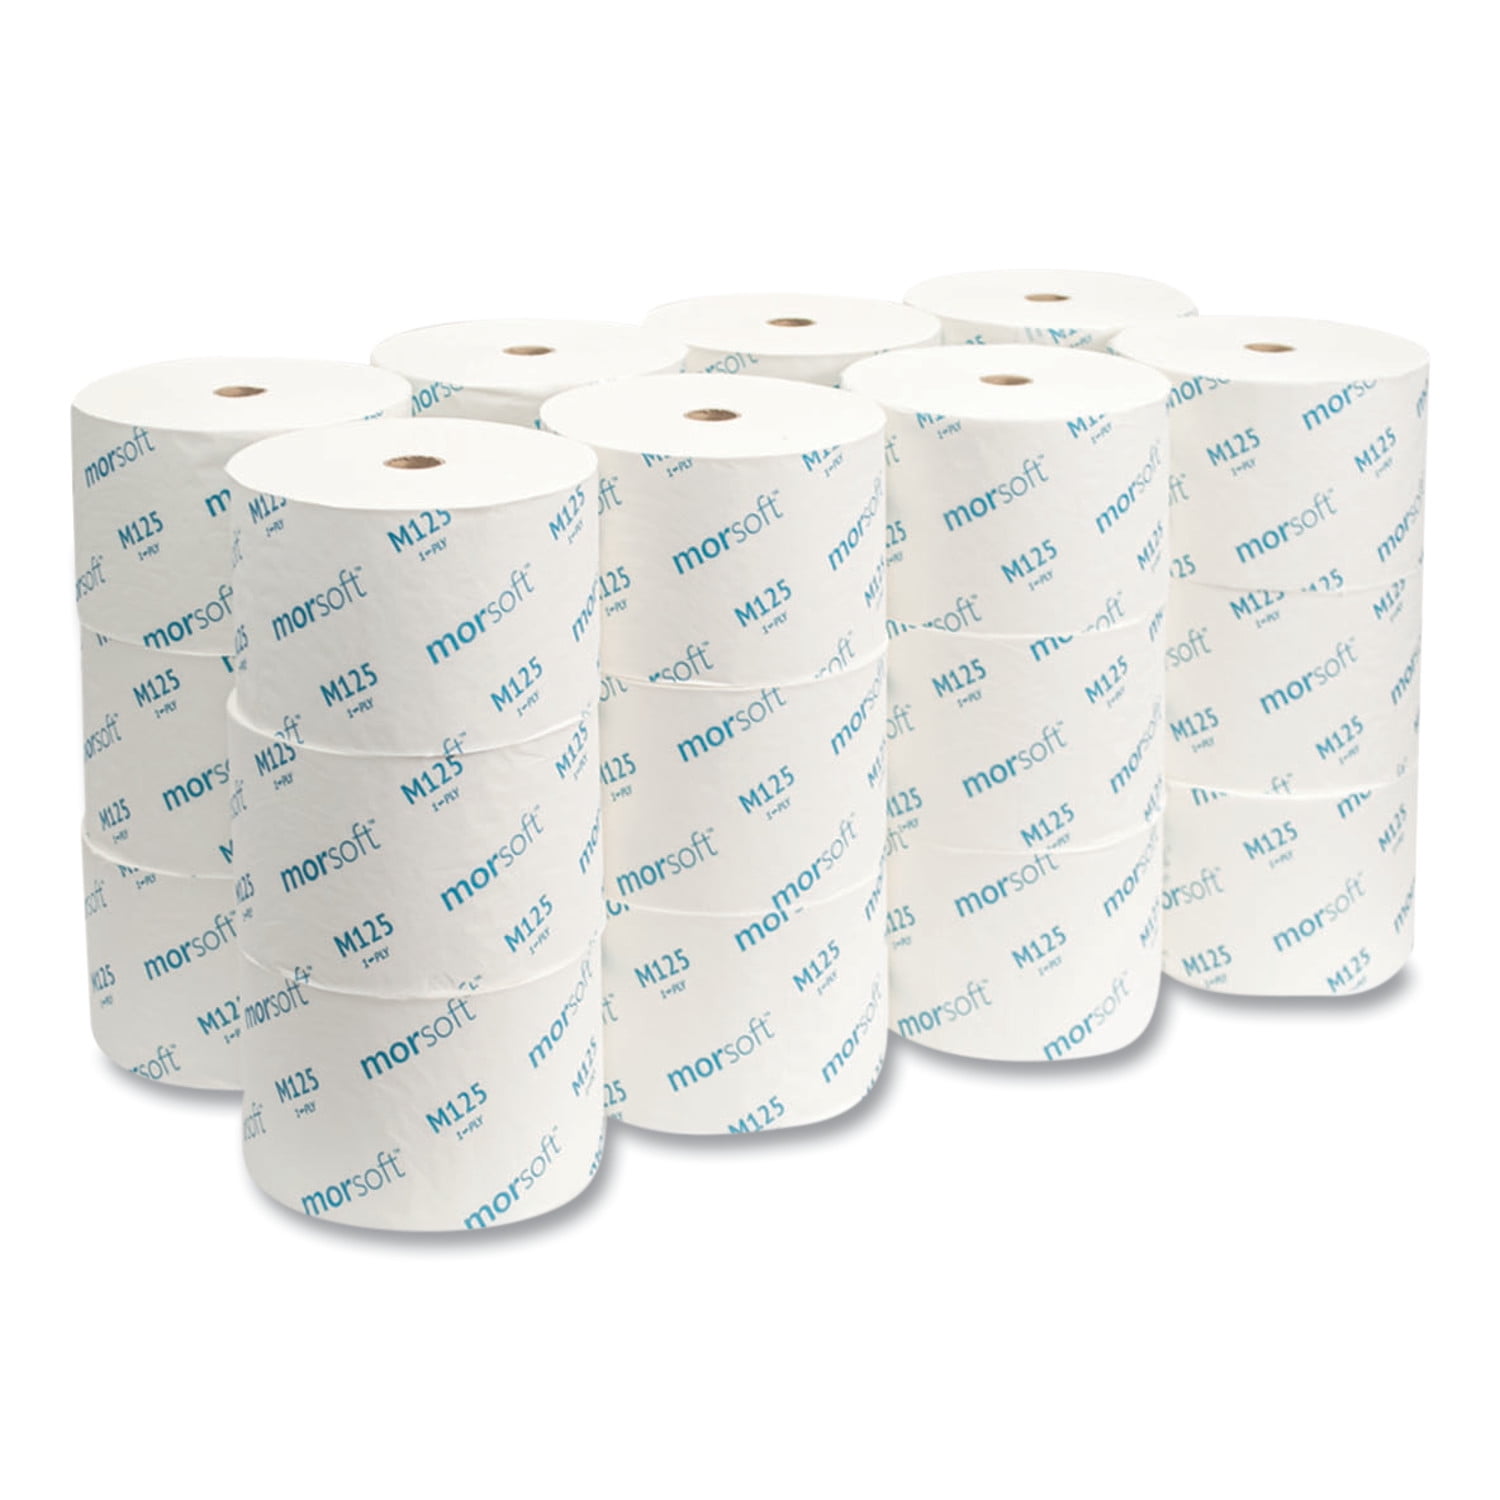 Roll DESIGNER BATH TISSUE Toilet Paper 250 SHEETS *YOU CHOOSE* EARTH & I* 1 